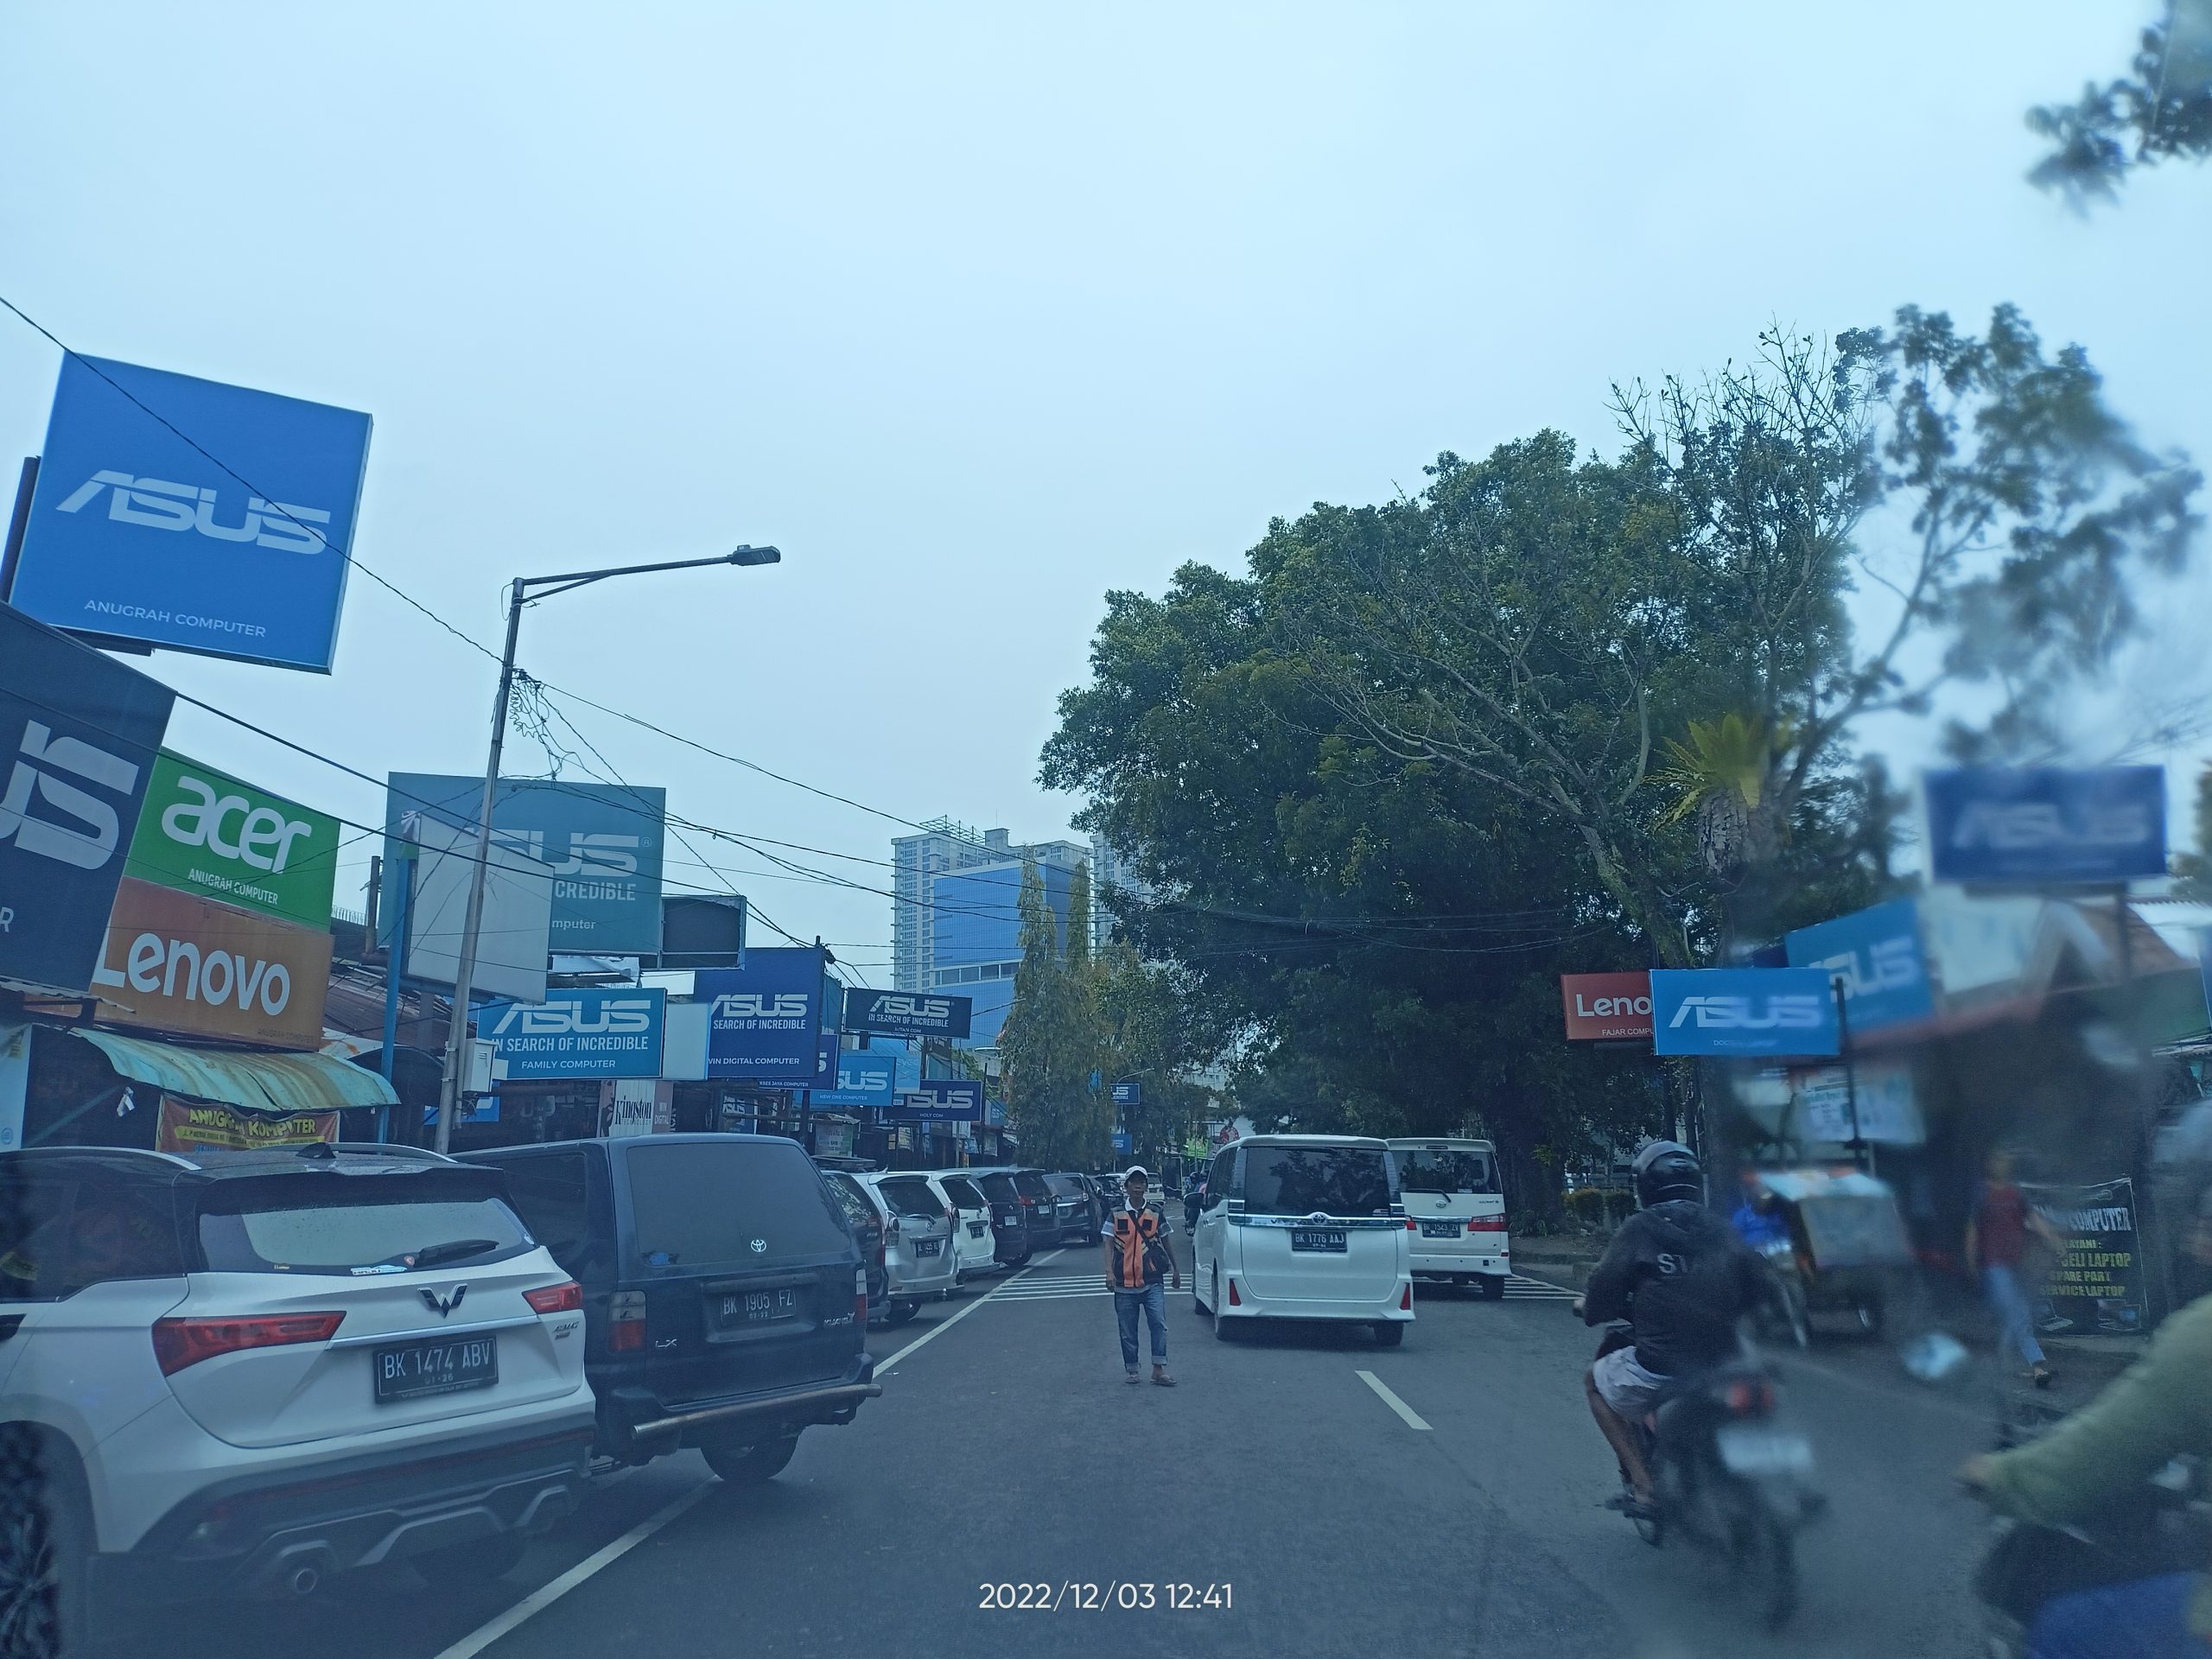 Calon Pembeli Resah, Toko Penjualan Komputer di Jalan Merak Jingga Marak Calo